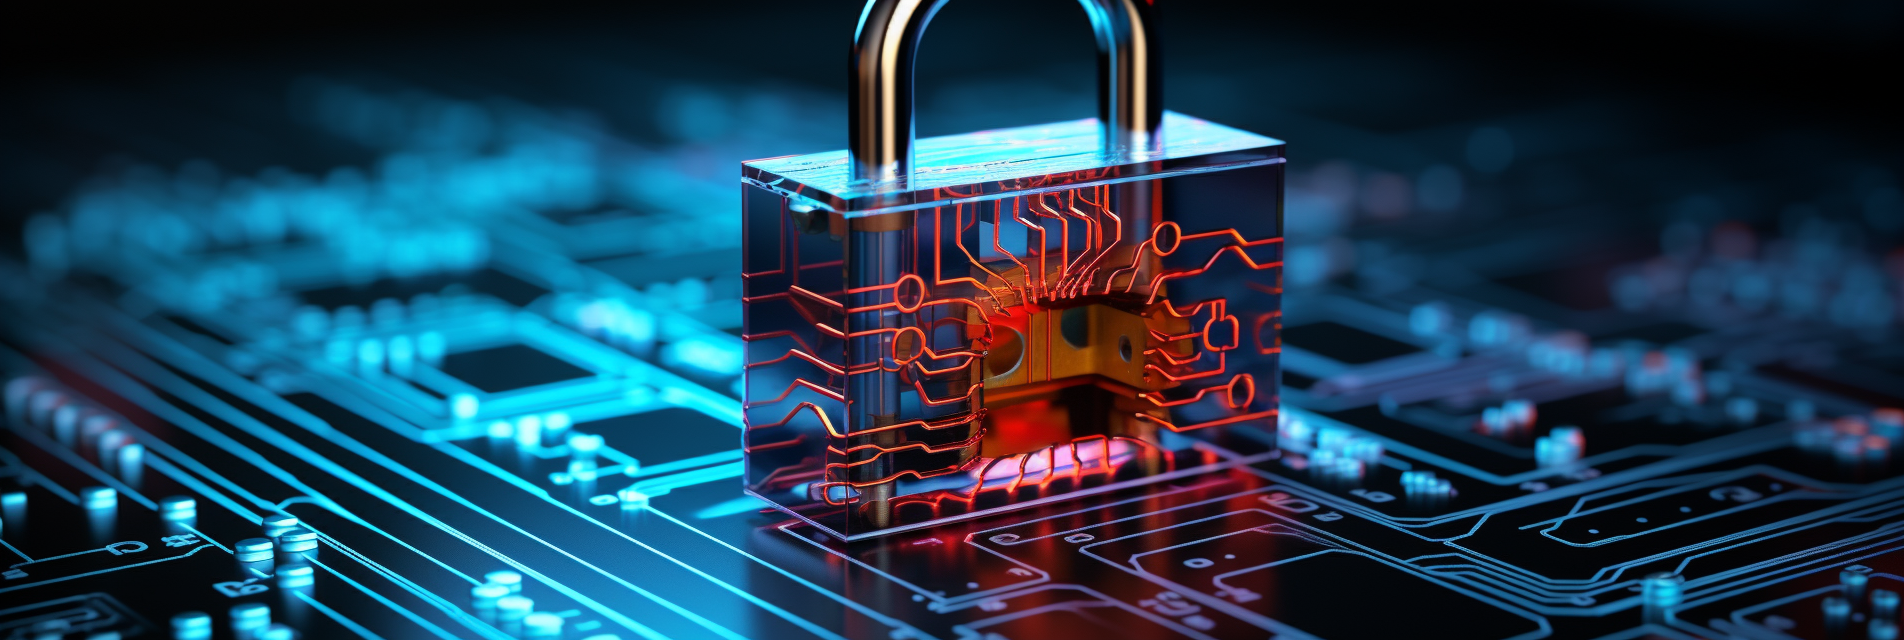 Digital Padlock | Cyber Essentials Certification Risks